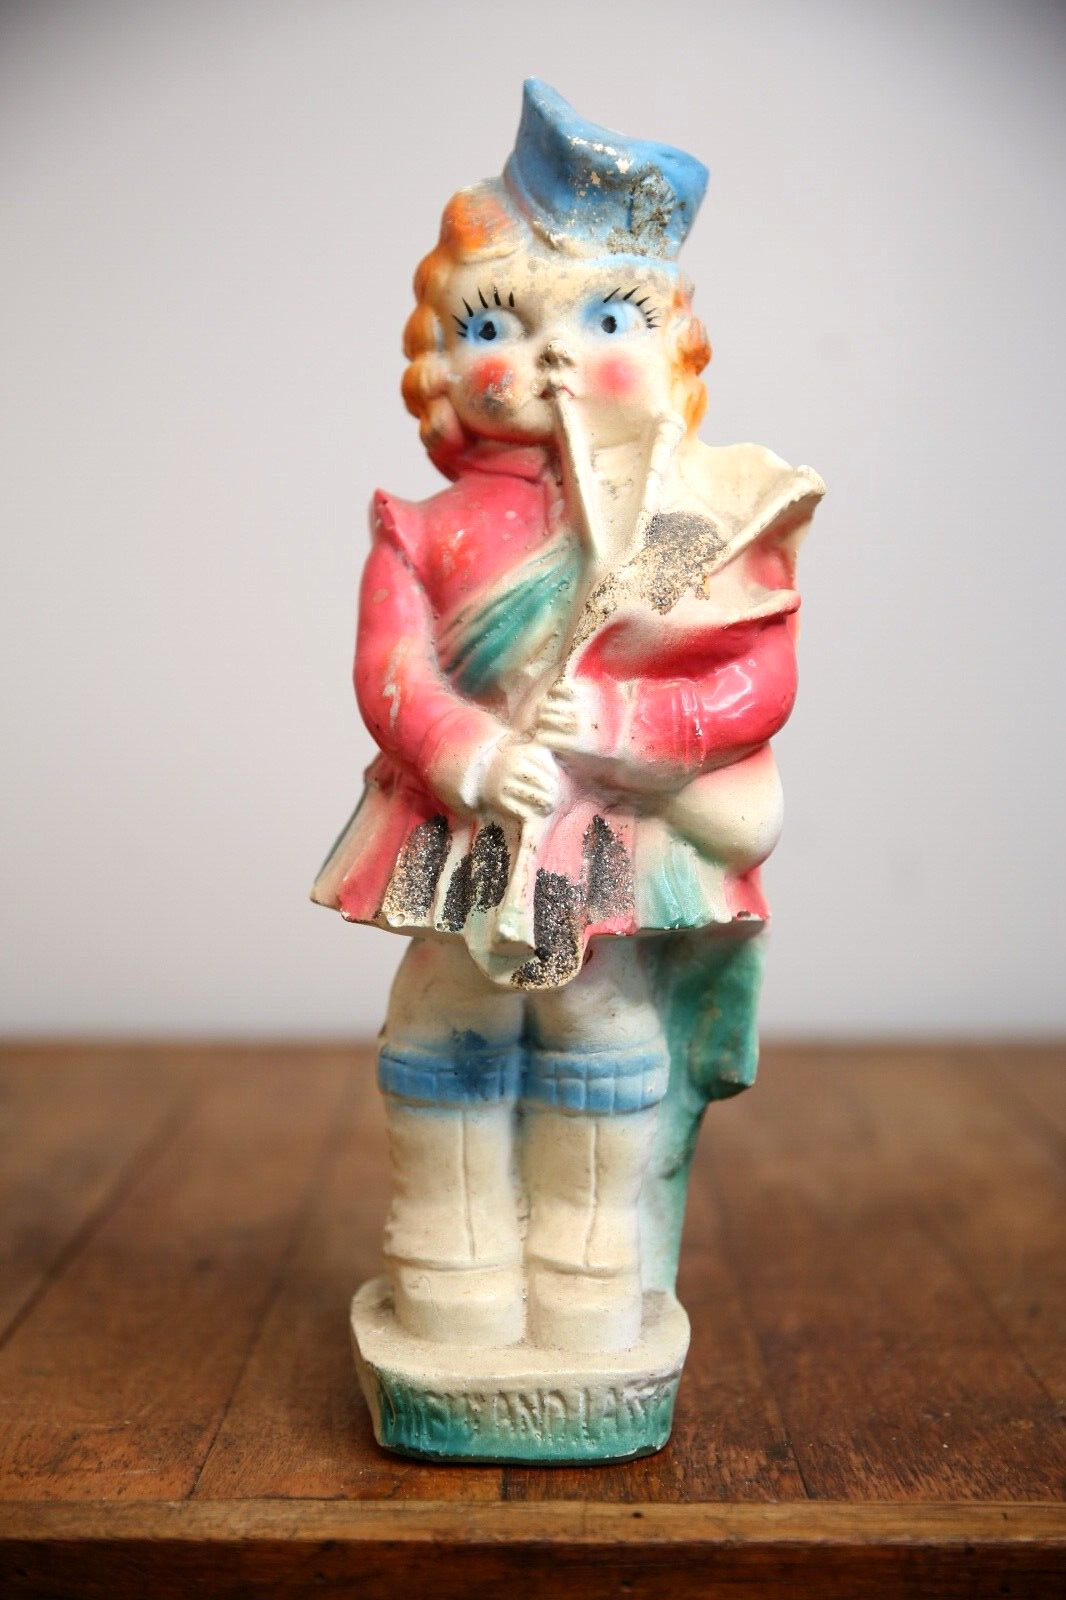 Vintage Chalkware Girl Carnival Prize figure hat uniform bagpipes musician old